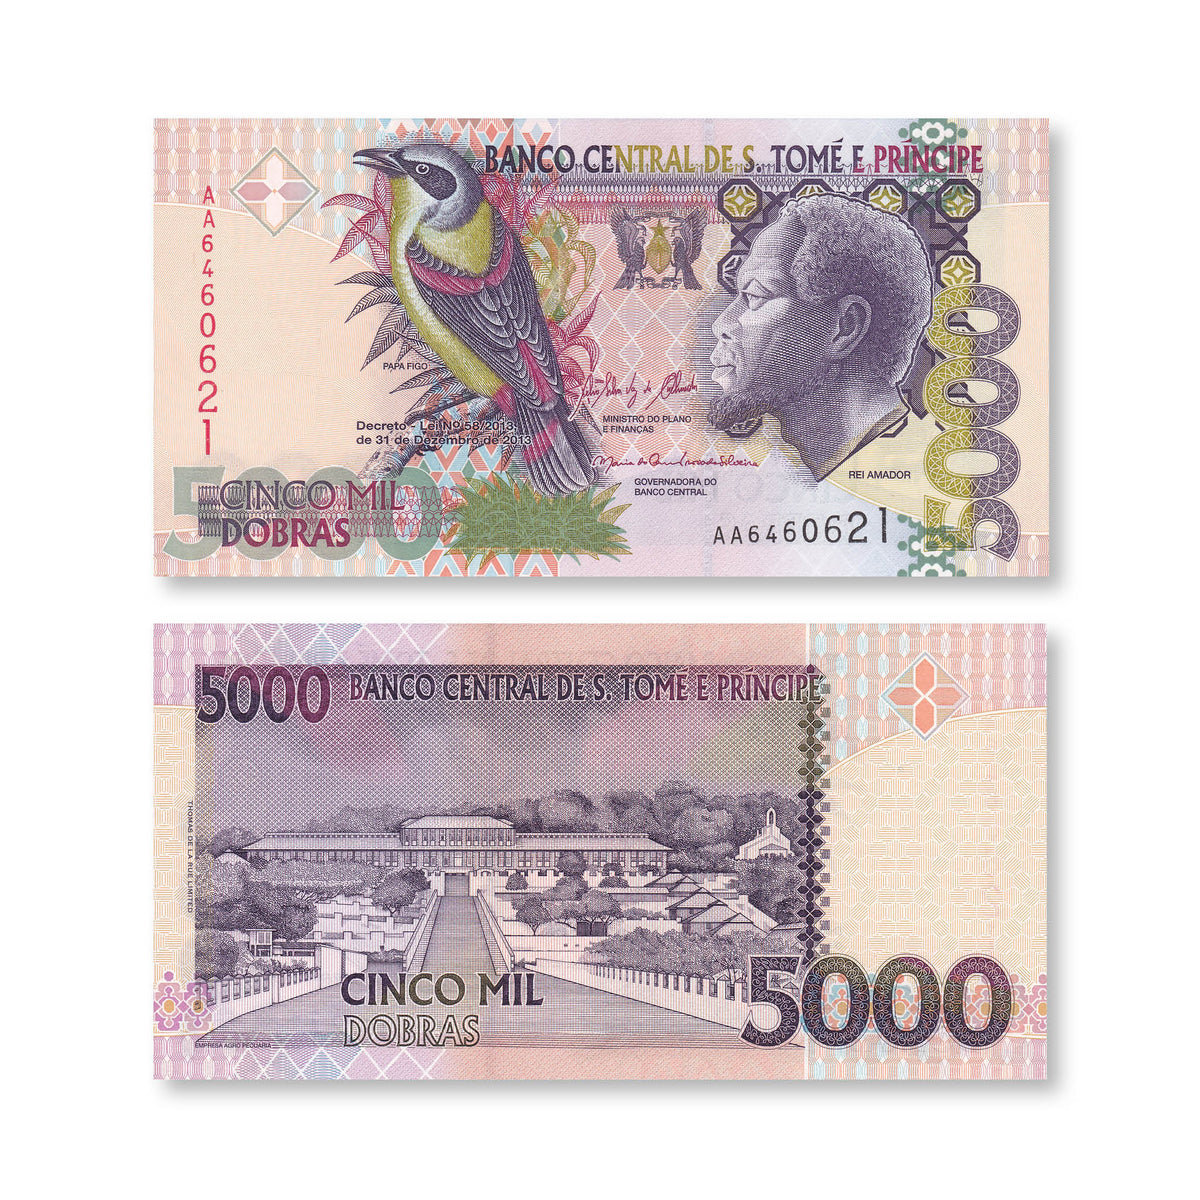 São Tomé & Príncipe 5000 Dobras, 2013, B303d, P65d, UNC - Robert's World Money - World Banknotes